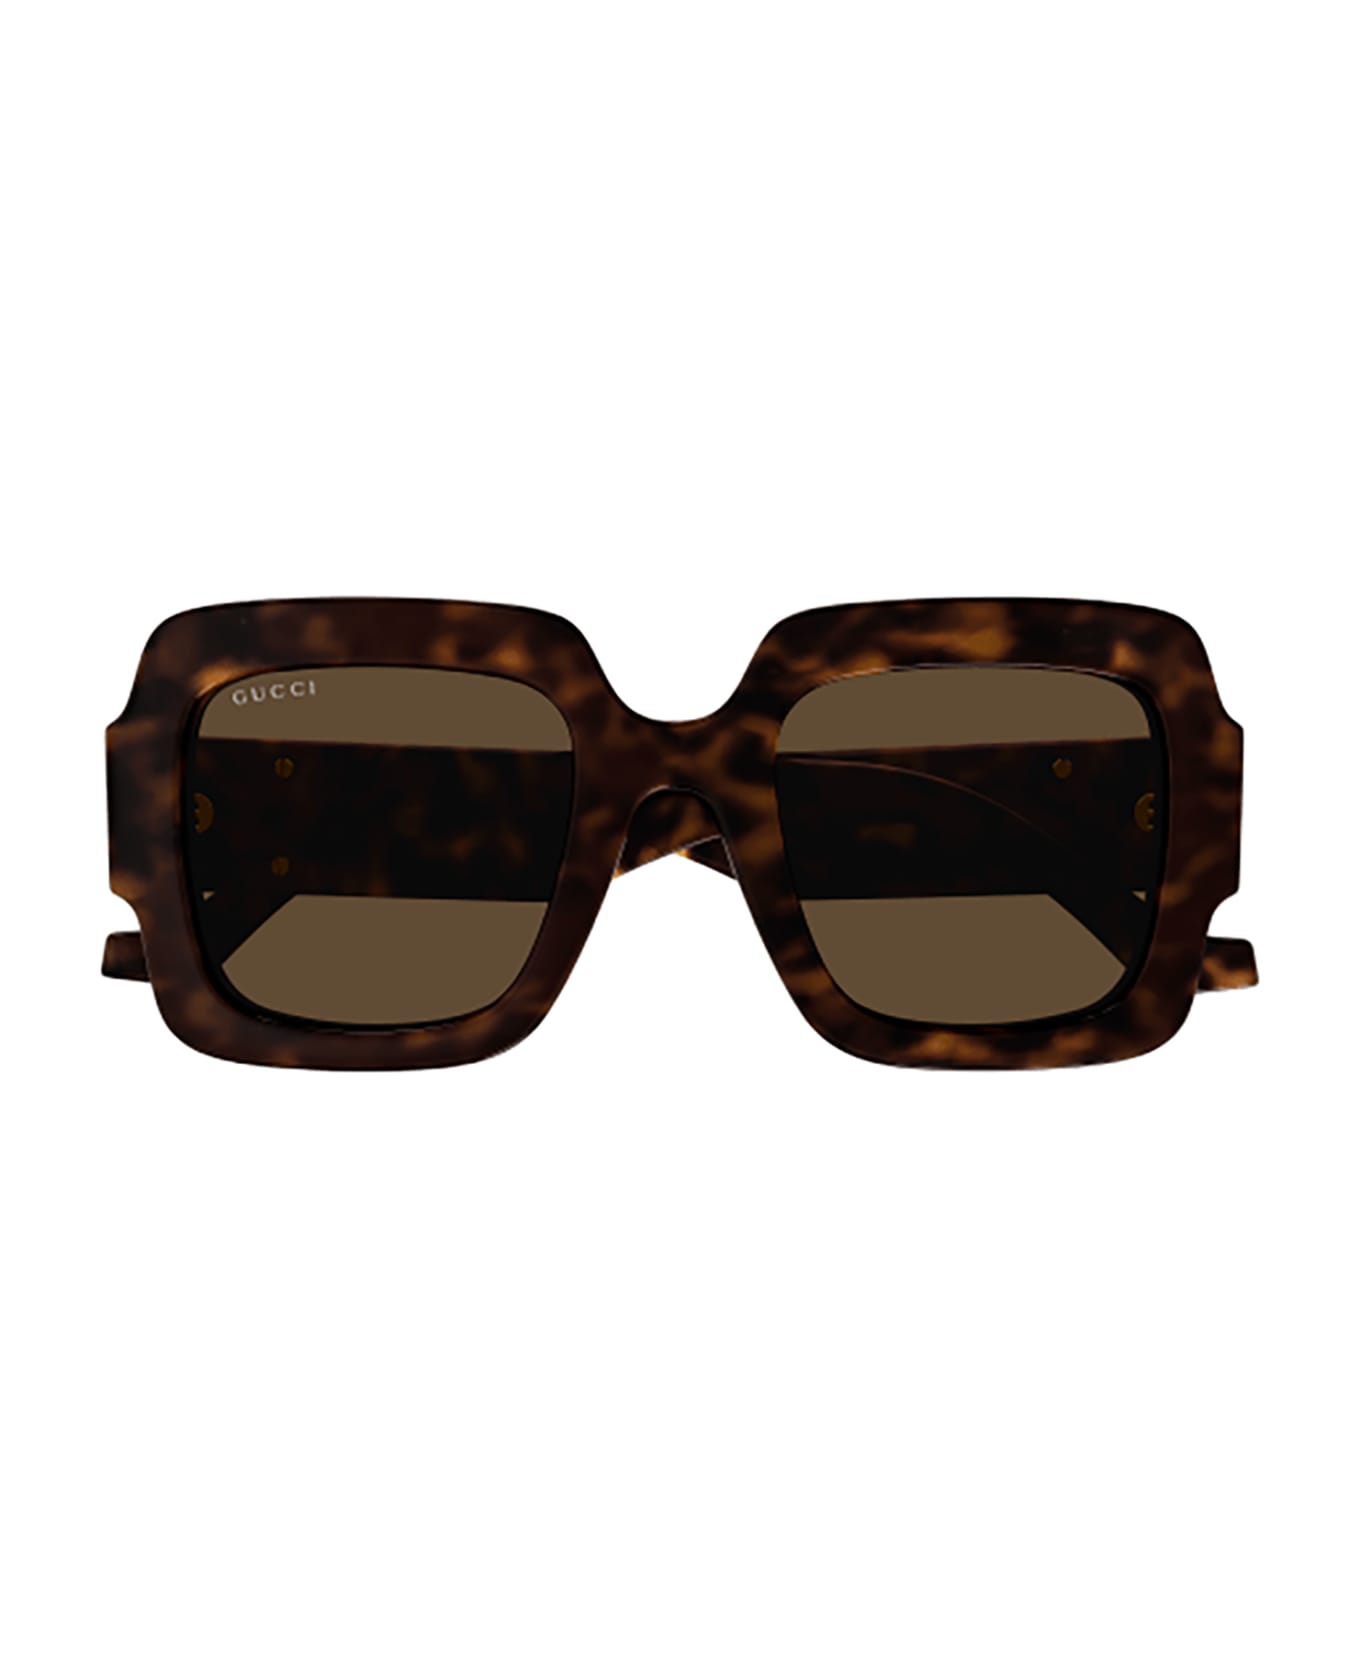 Gucci Eyewear GG1547S Sunglasses - M3070 Bordeaux Rose Gold Sunglasses